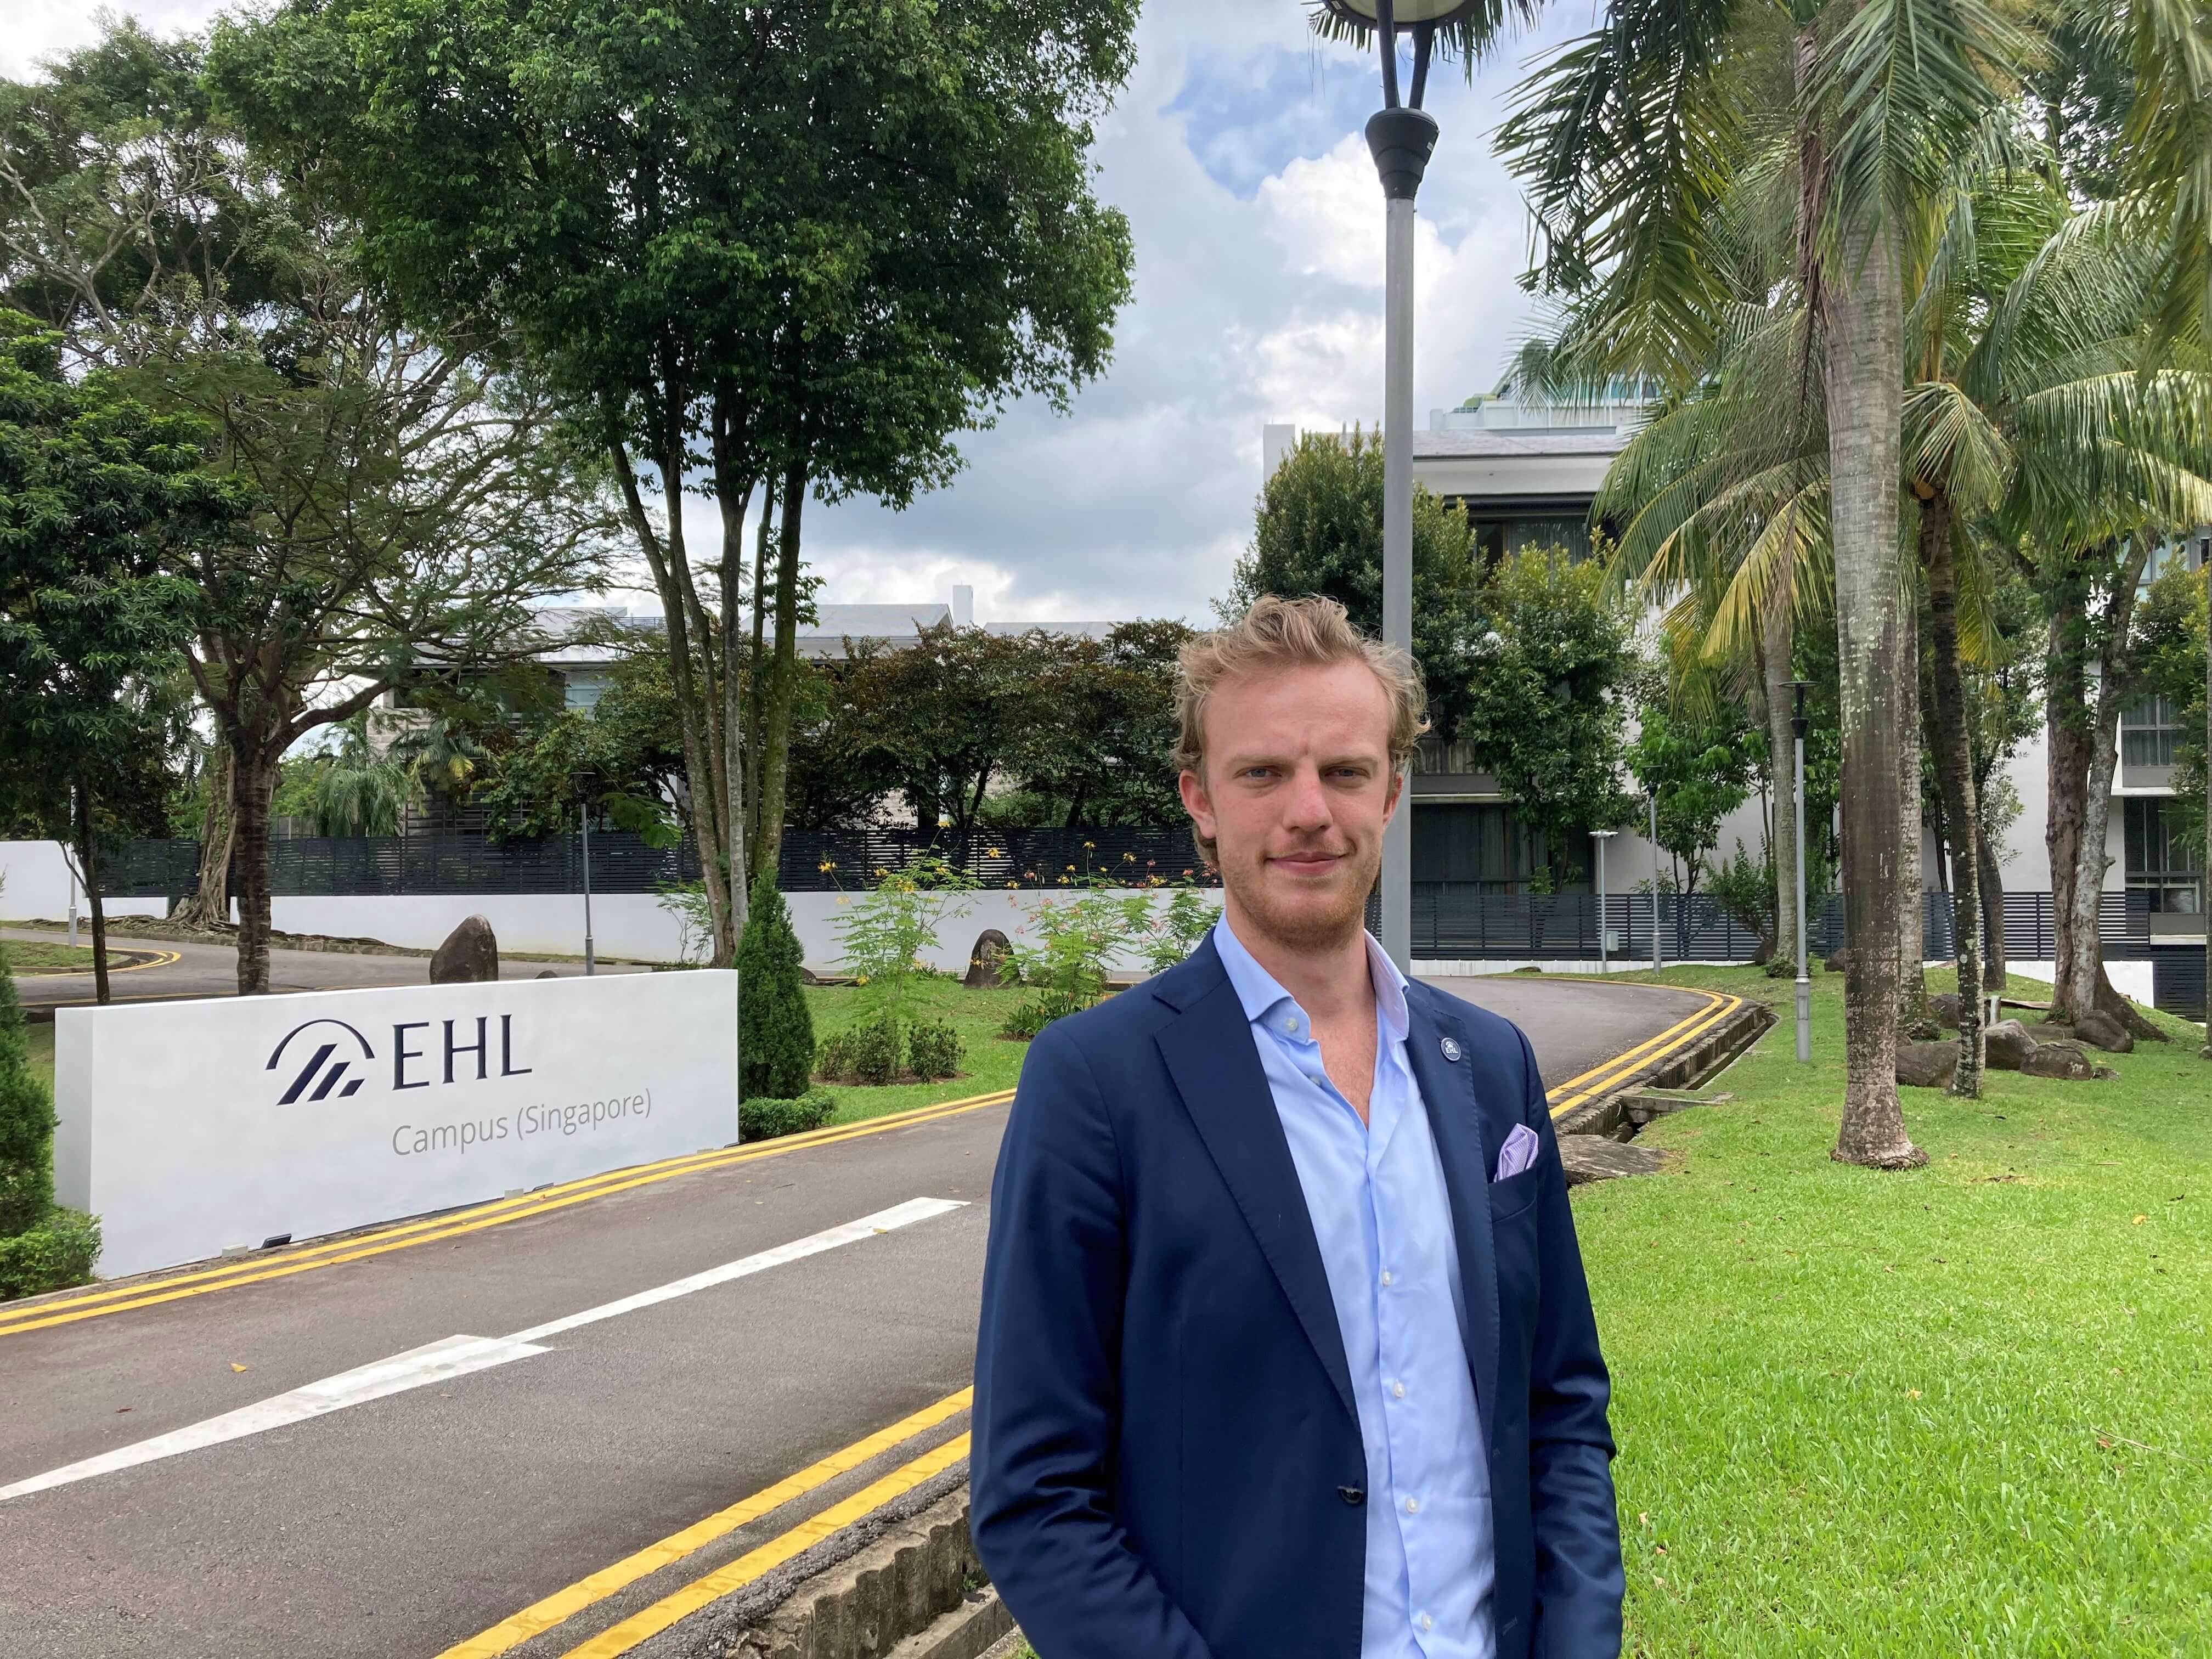 Hugo Tyden: The Swede who chose to study hospitality in Singapore